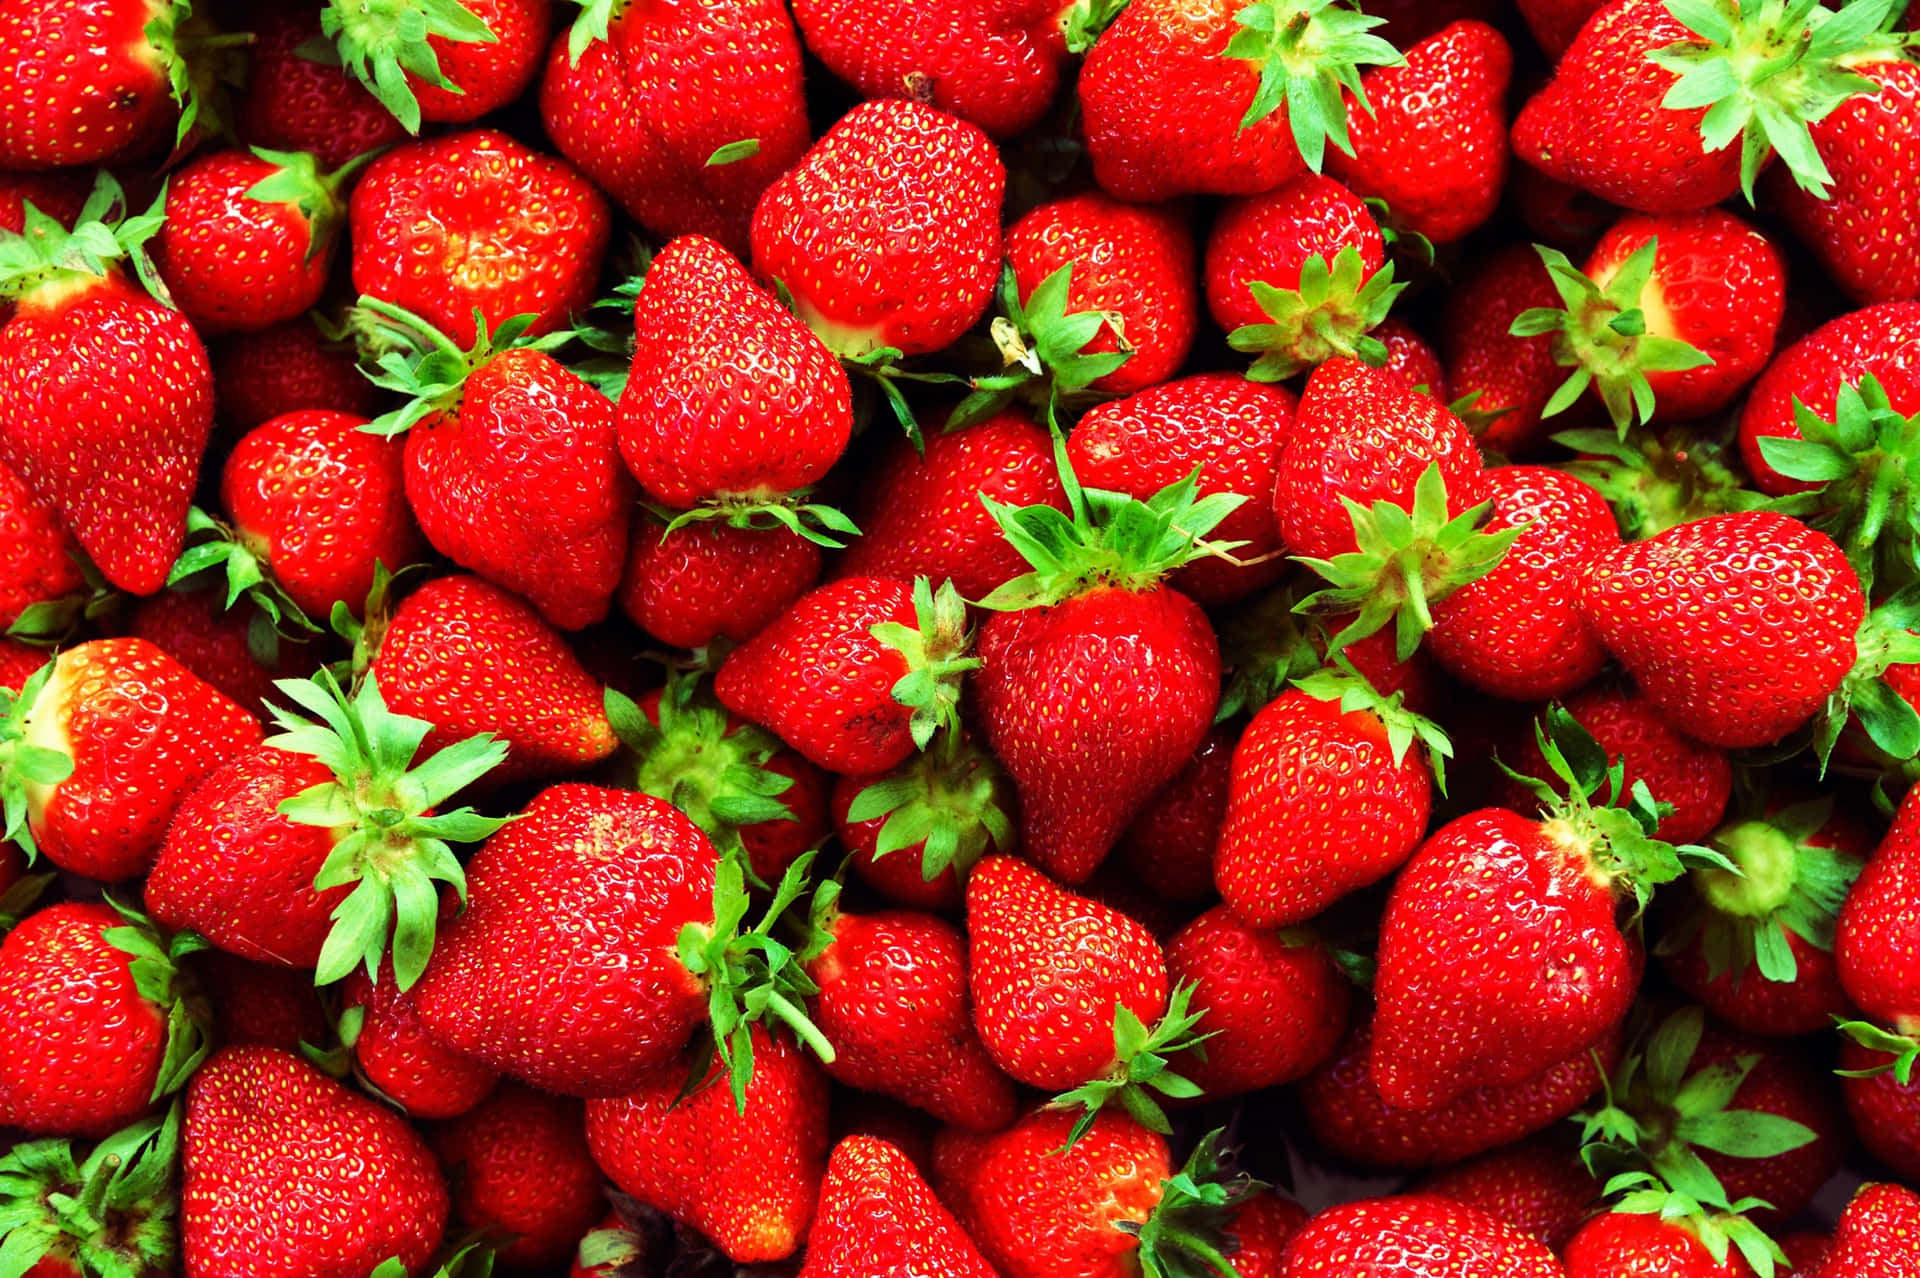 An abundance of ripe and tasty Strawberries